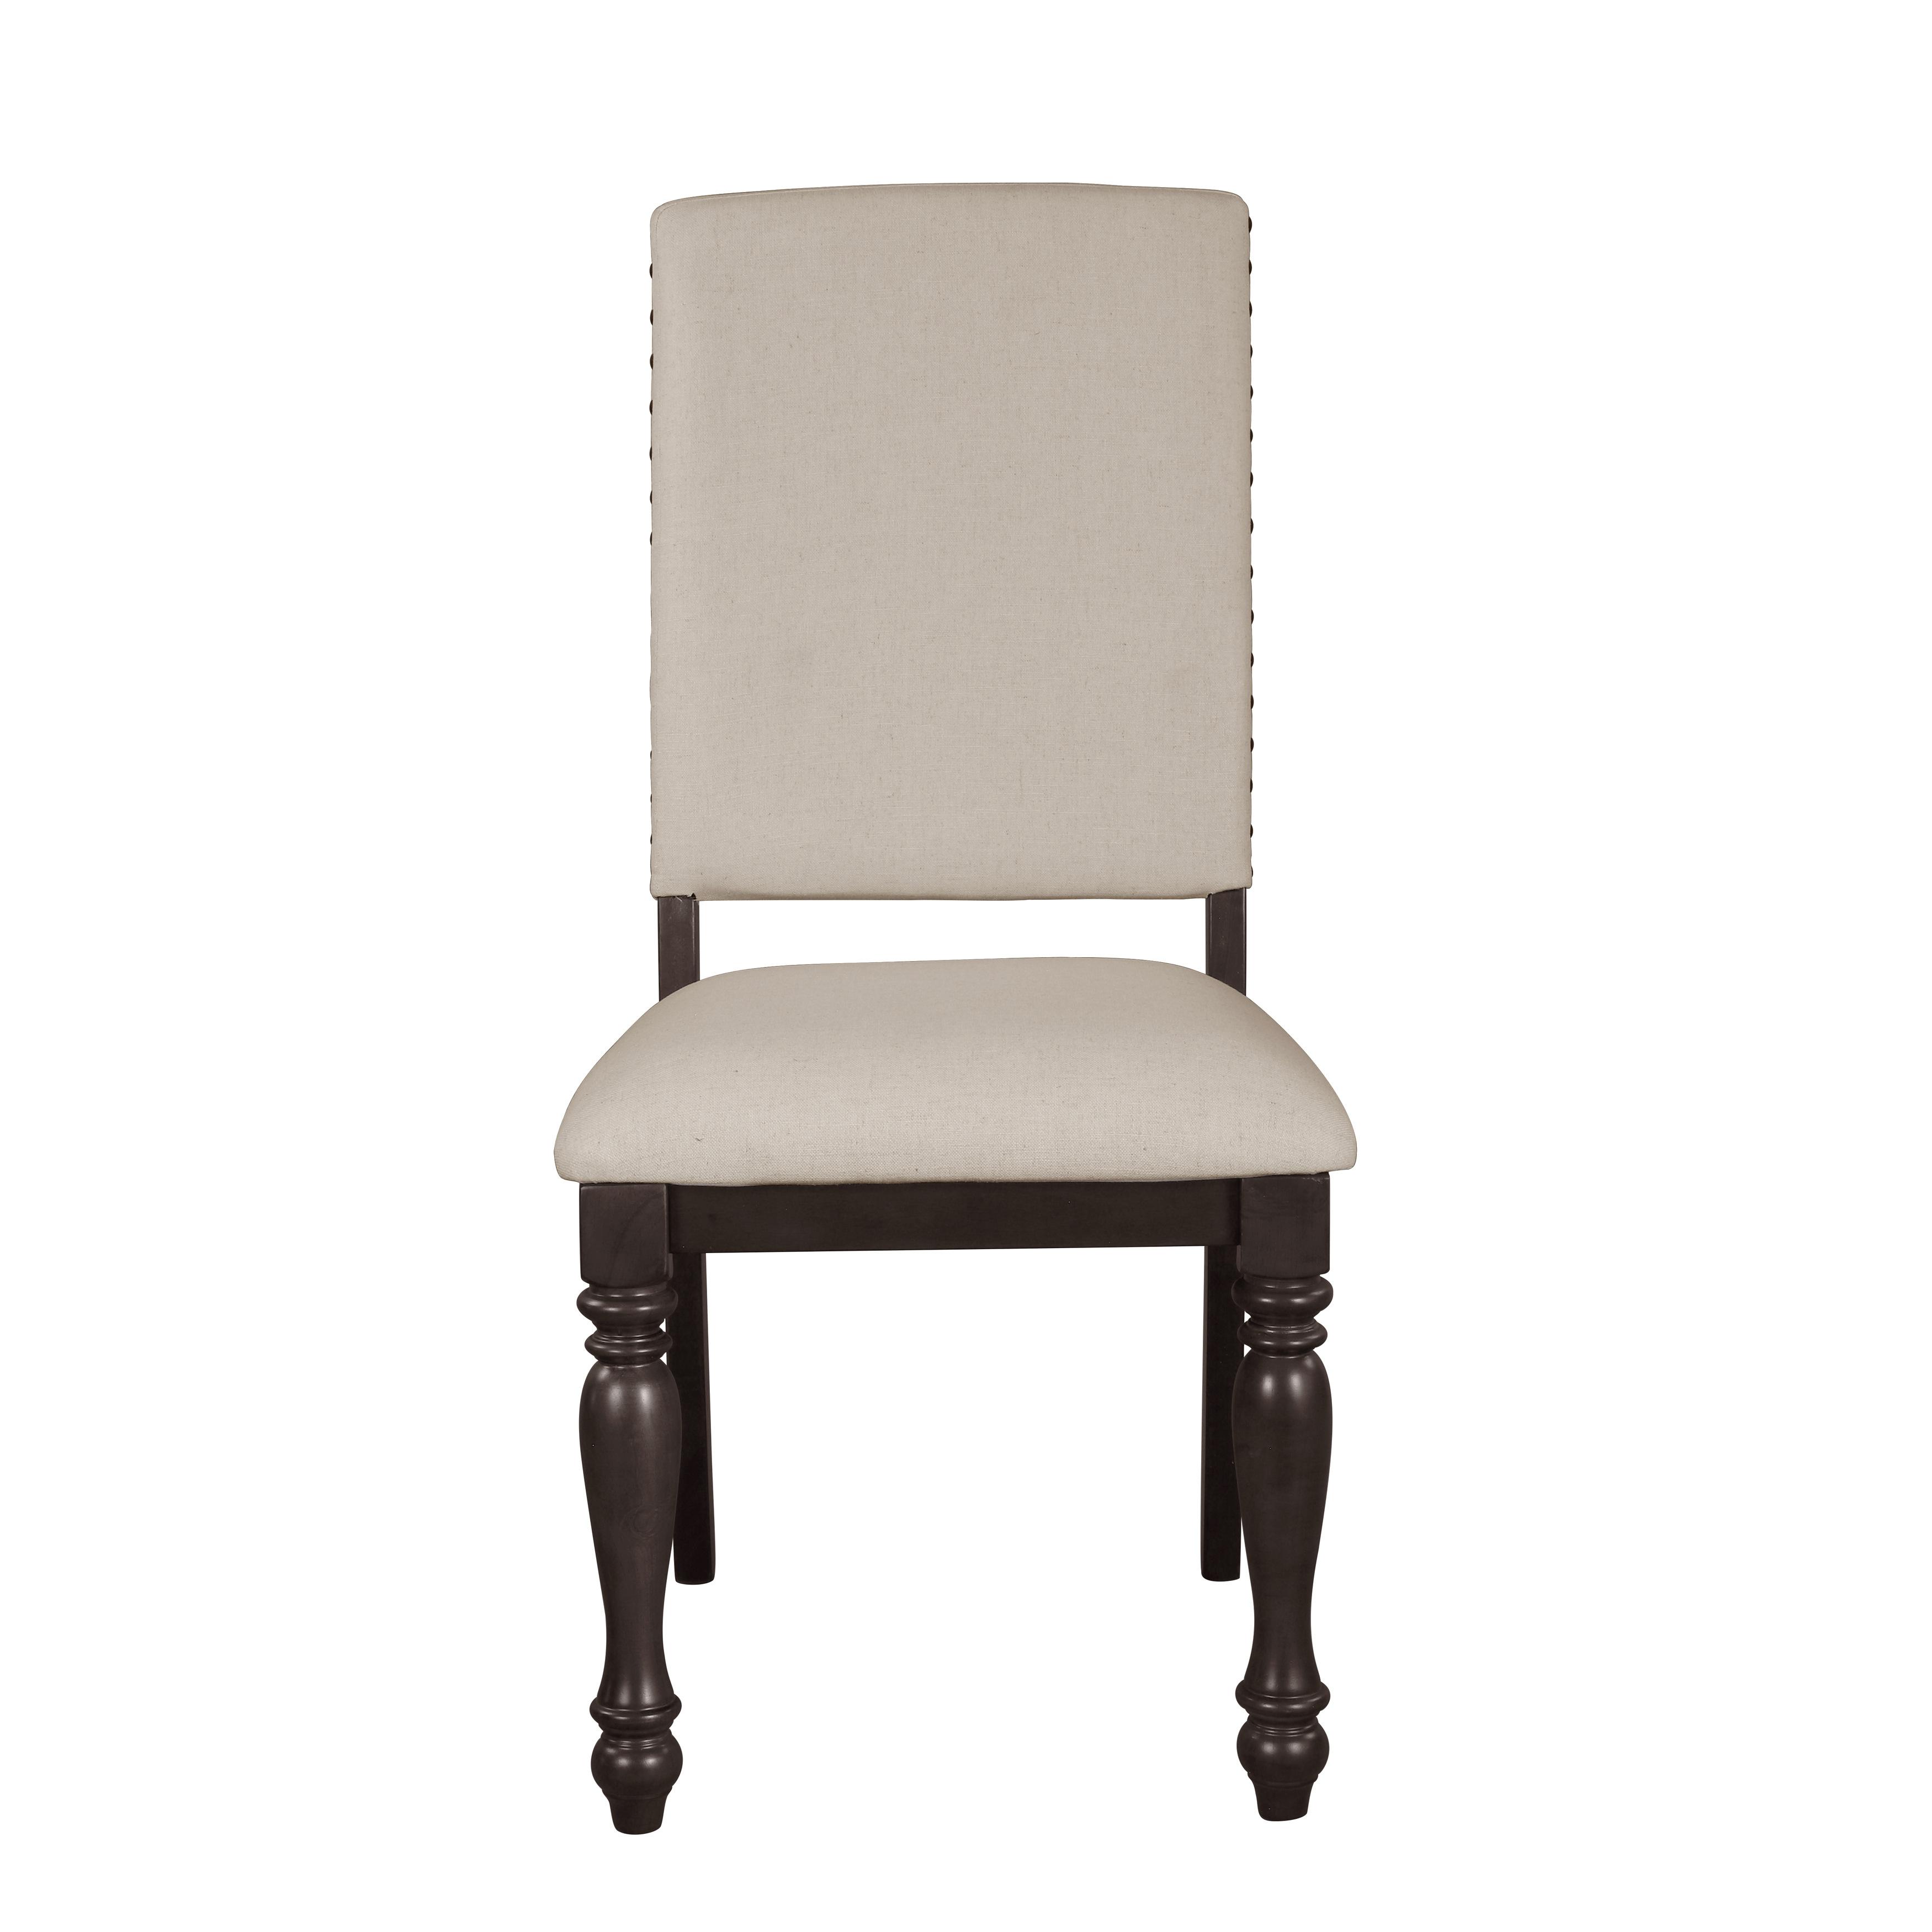 Transitional Side Chair Set 1718GYS Begonia 1718GYS in Grayish Brown Fabric